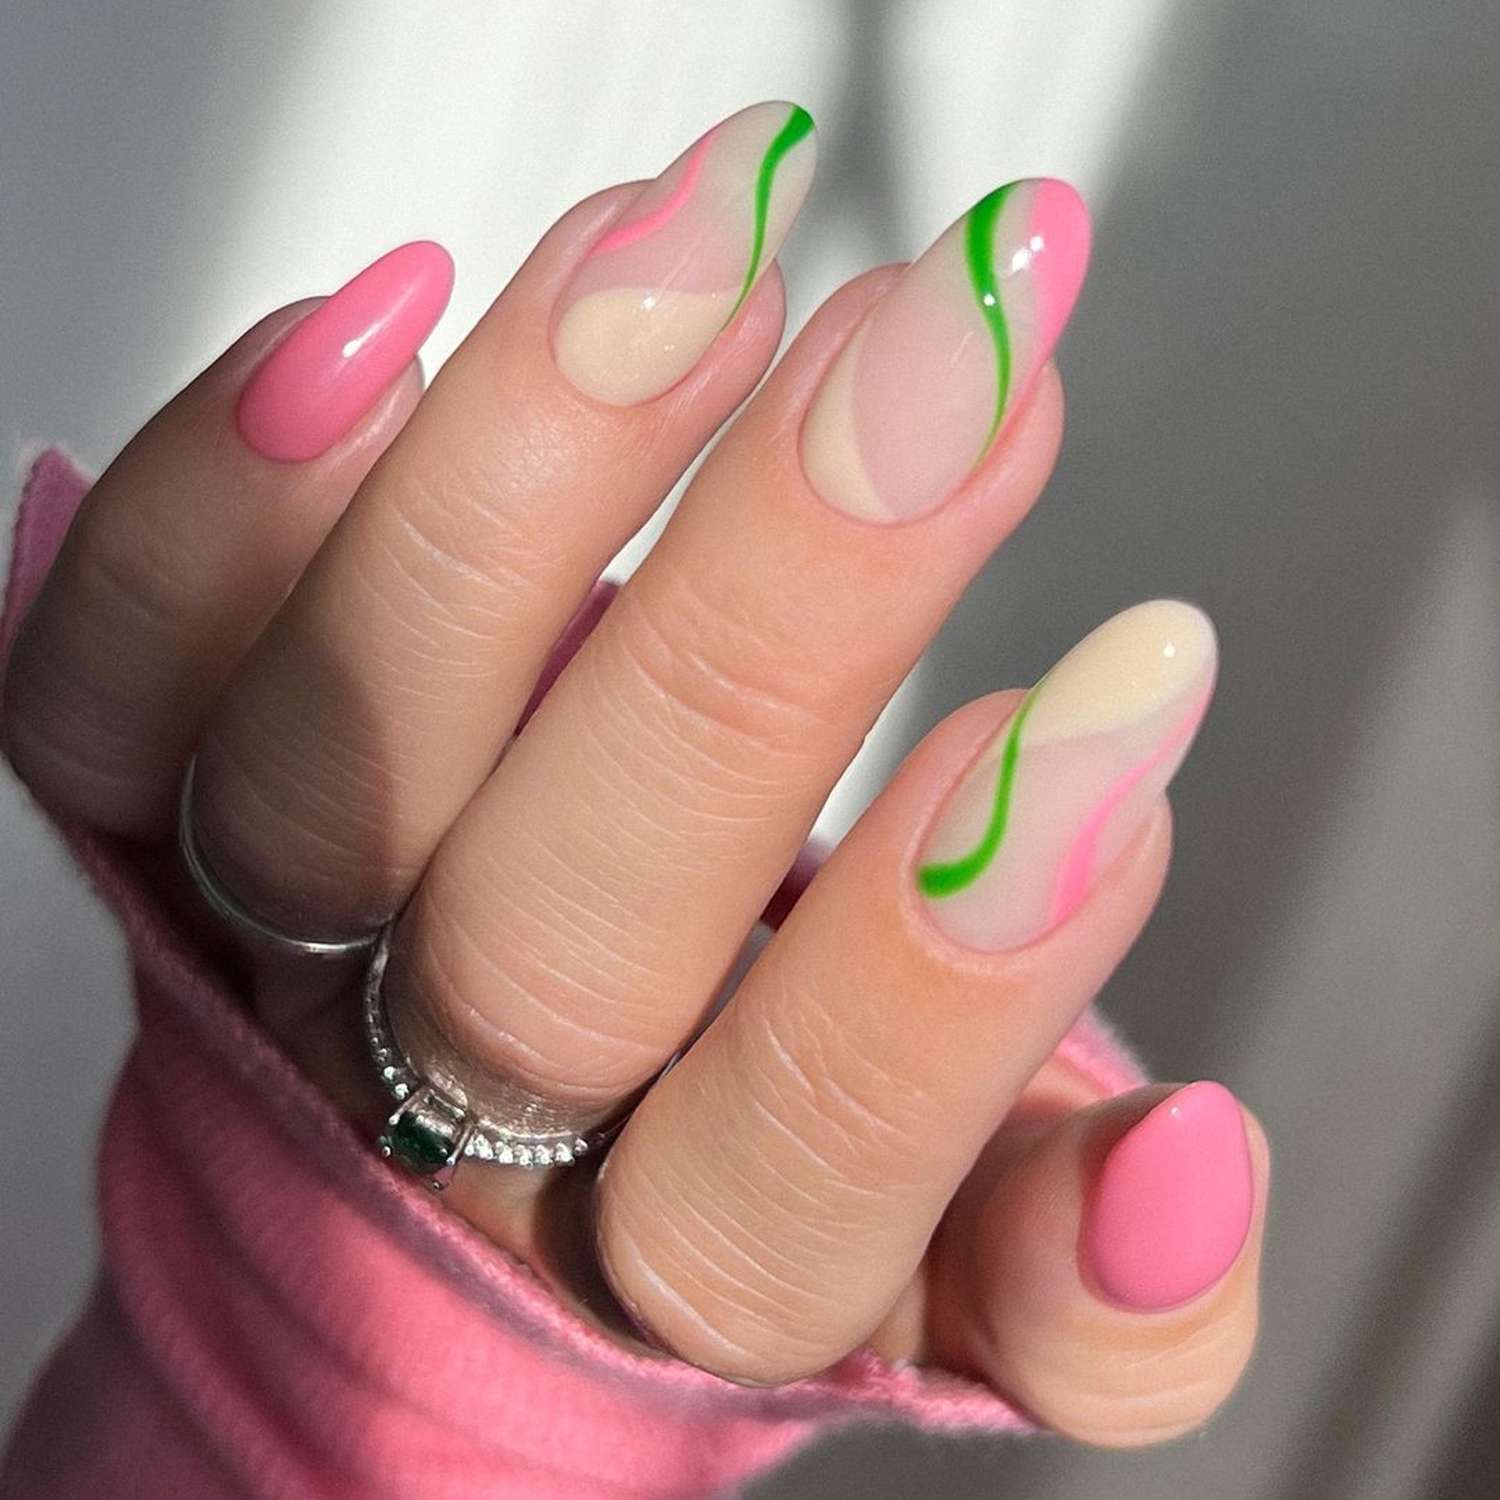 Design de unhas com ondas abstratas rosa, verde e creme